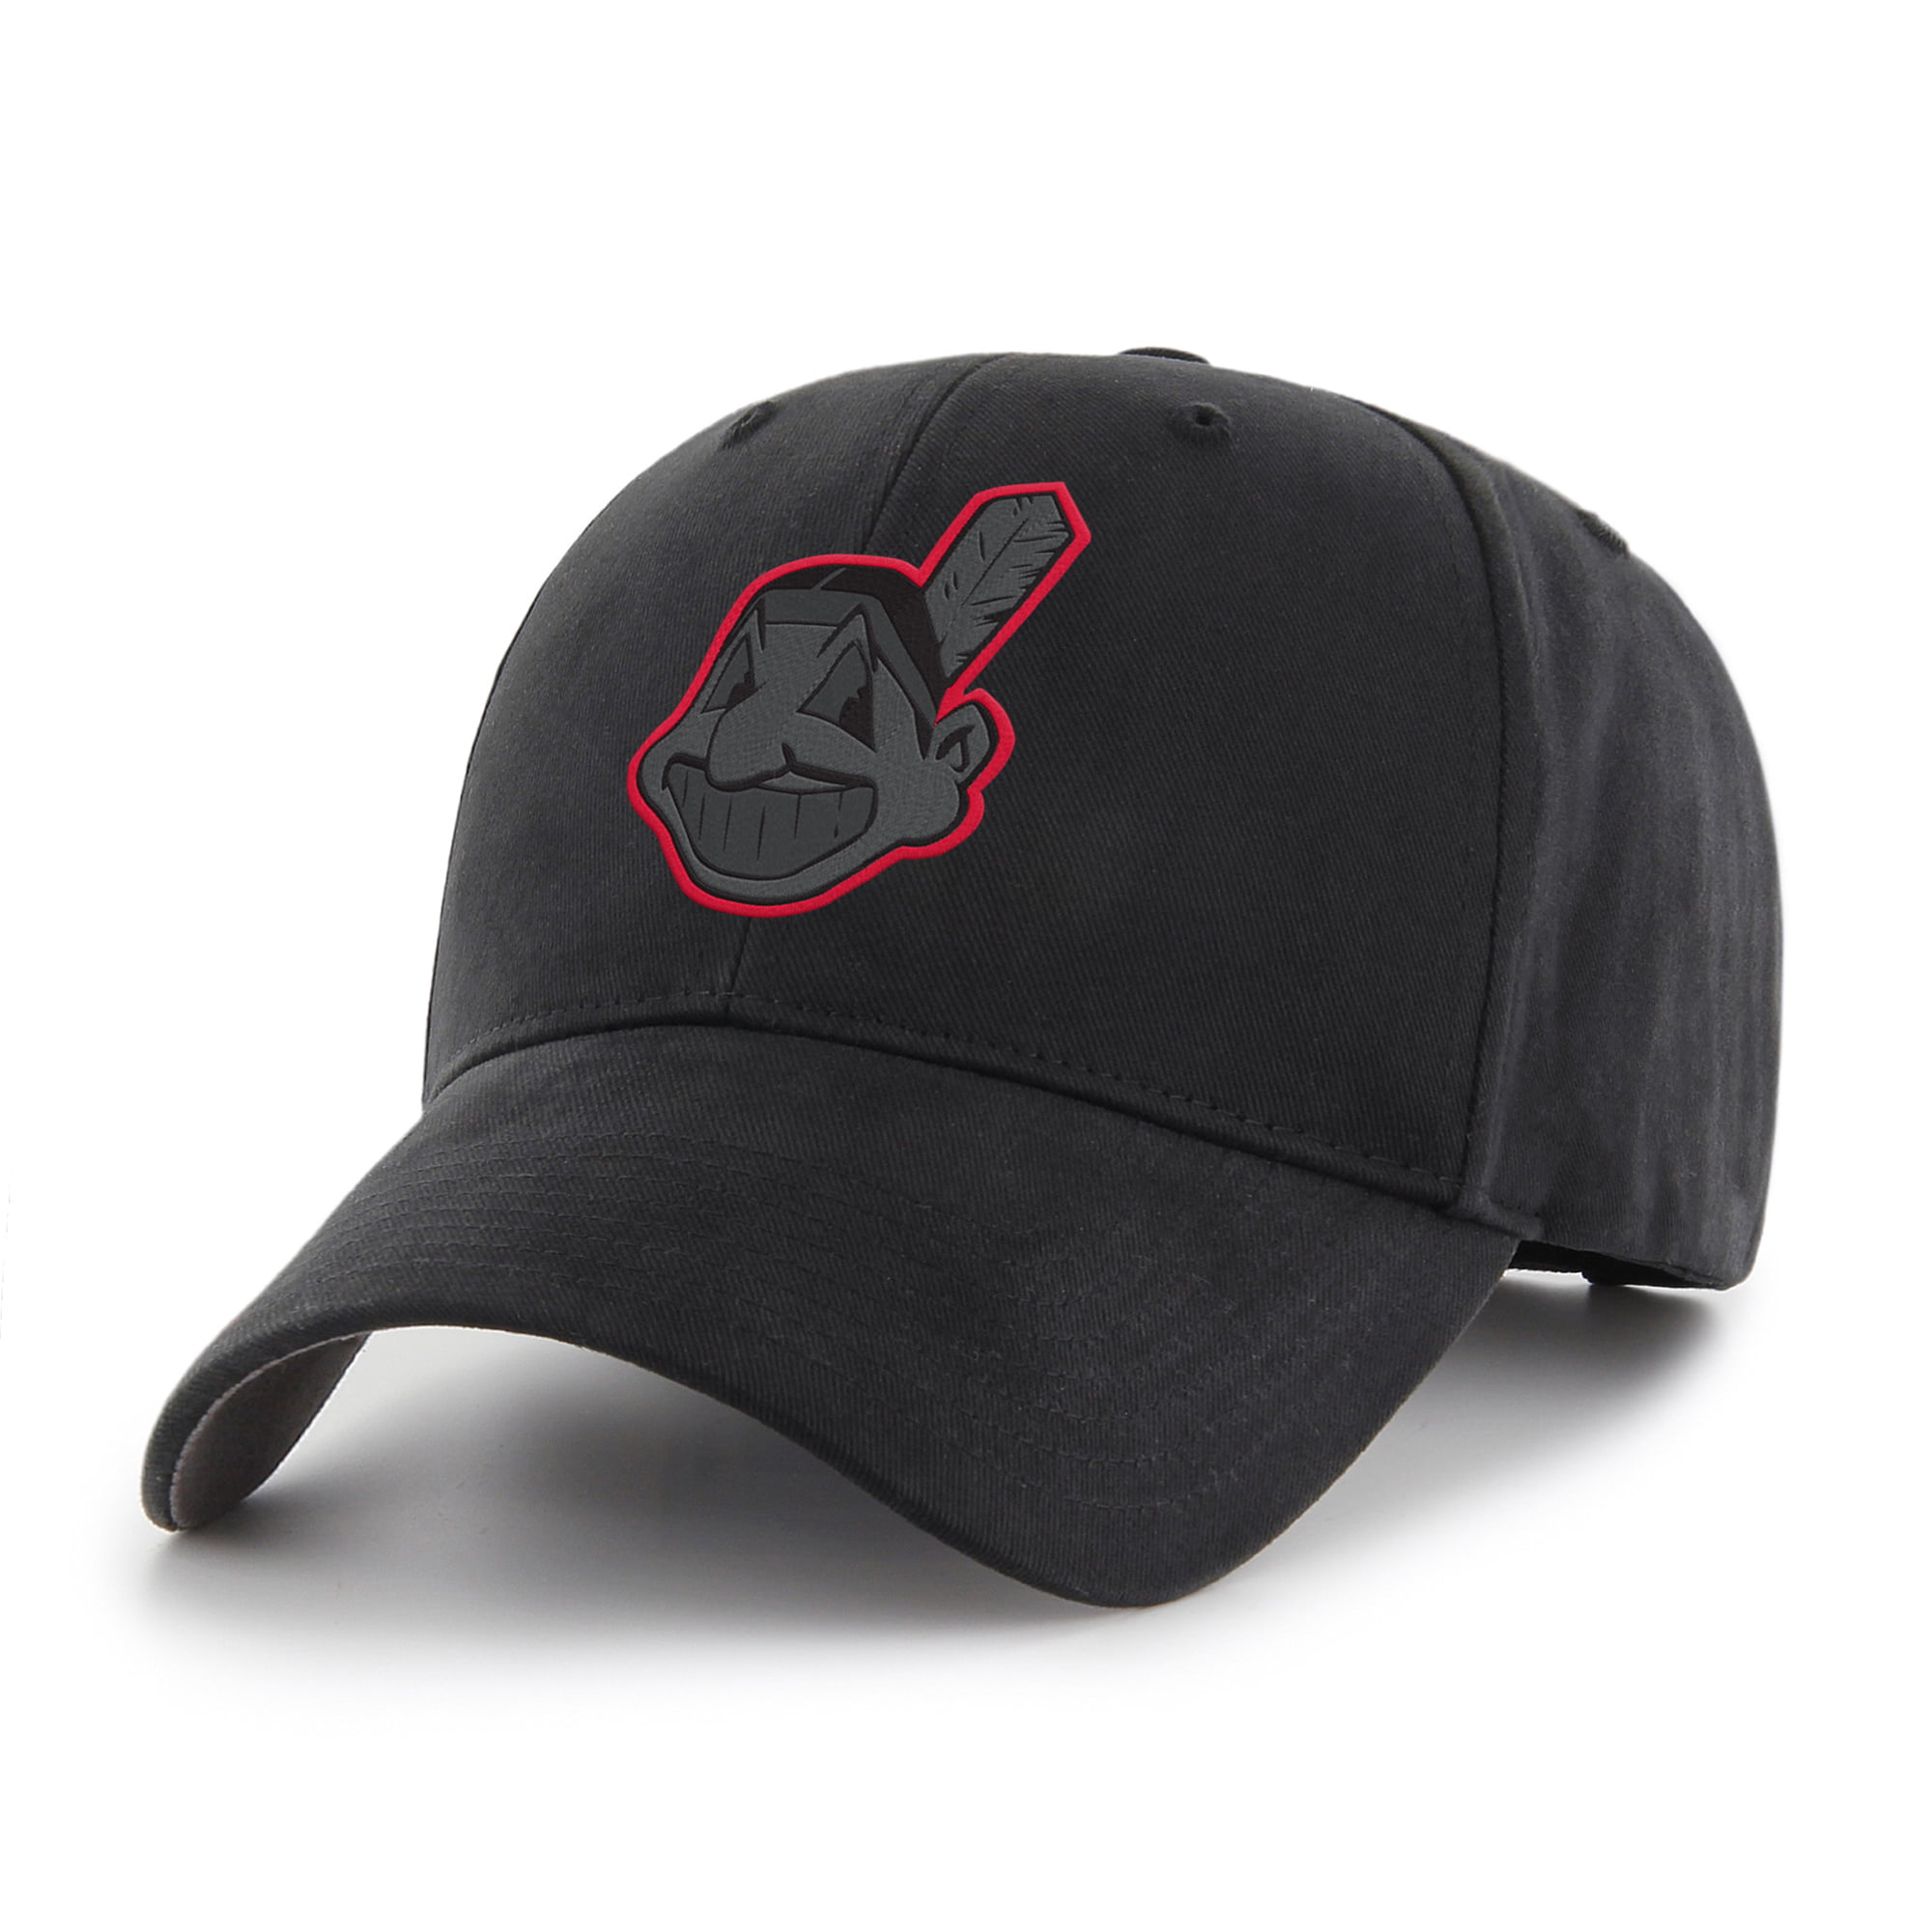 MLB Cleveland Indians Black Mass Basic Adjustable Cap/Hat by Fan